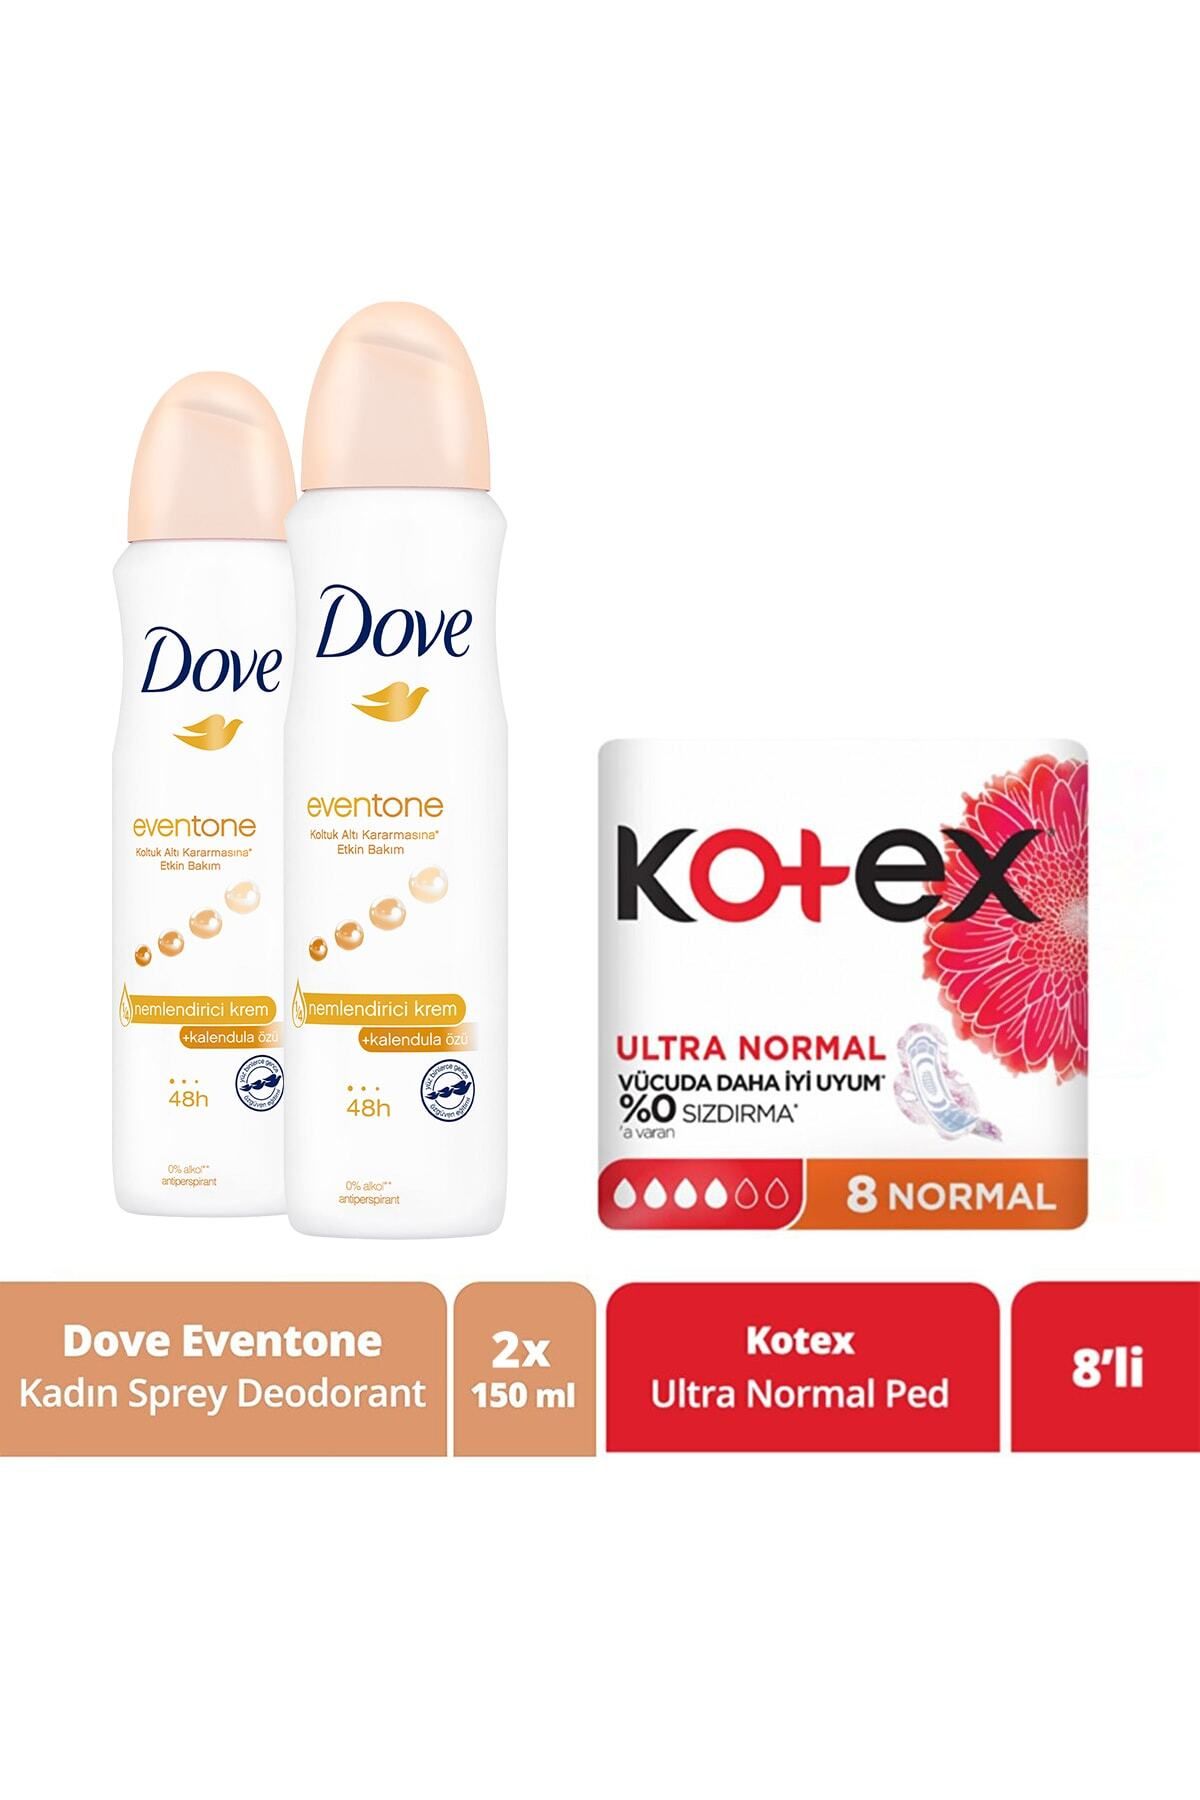 Dove Kadın Sprey Deodorant Eventone 150 ml x2 + Kotex Ped Ultra Normal 8'li